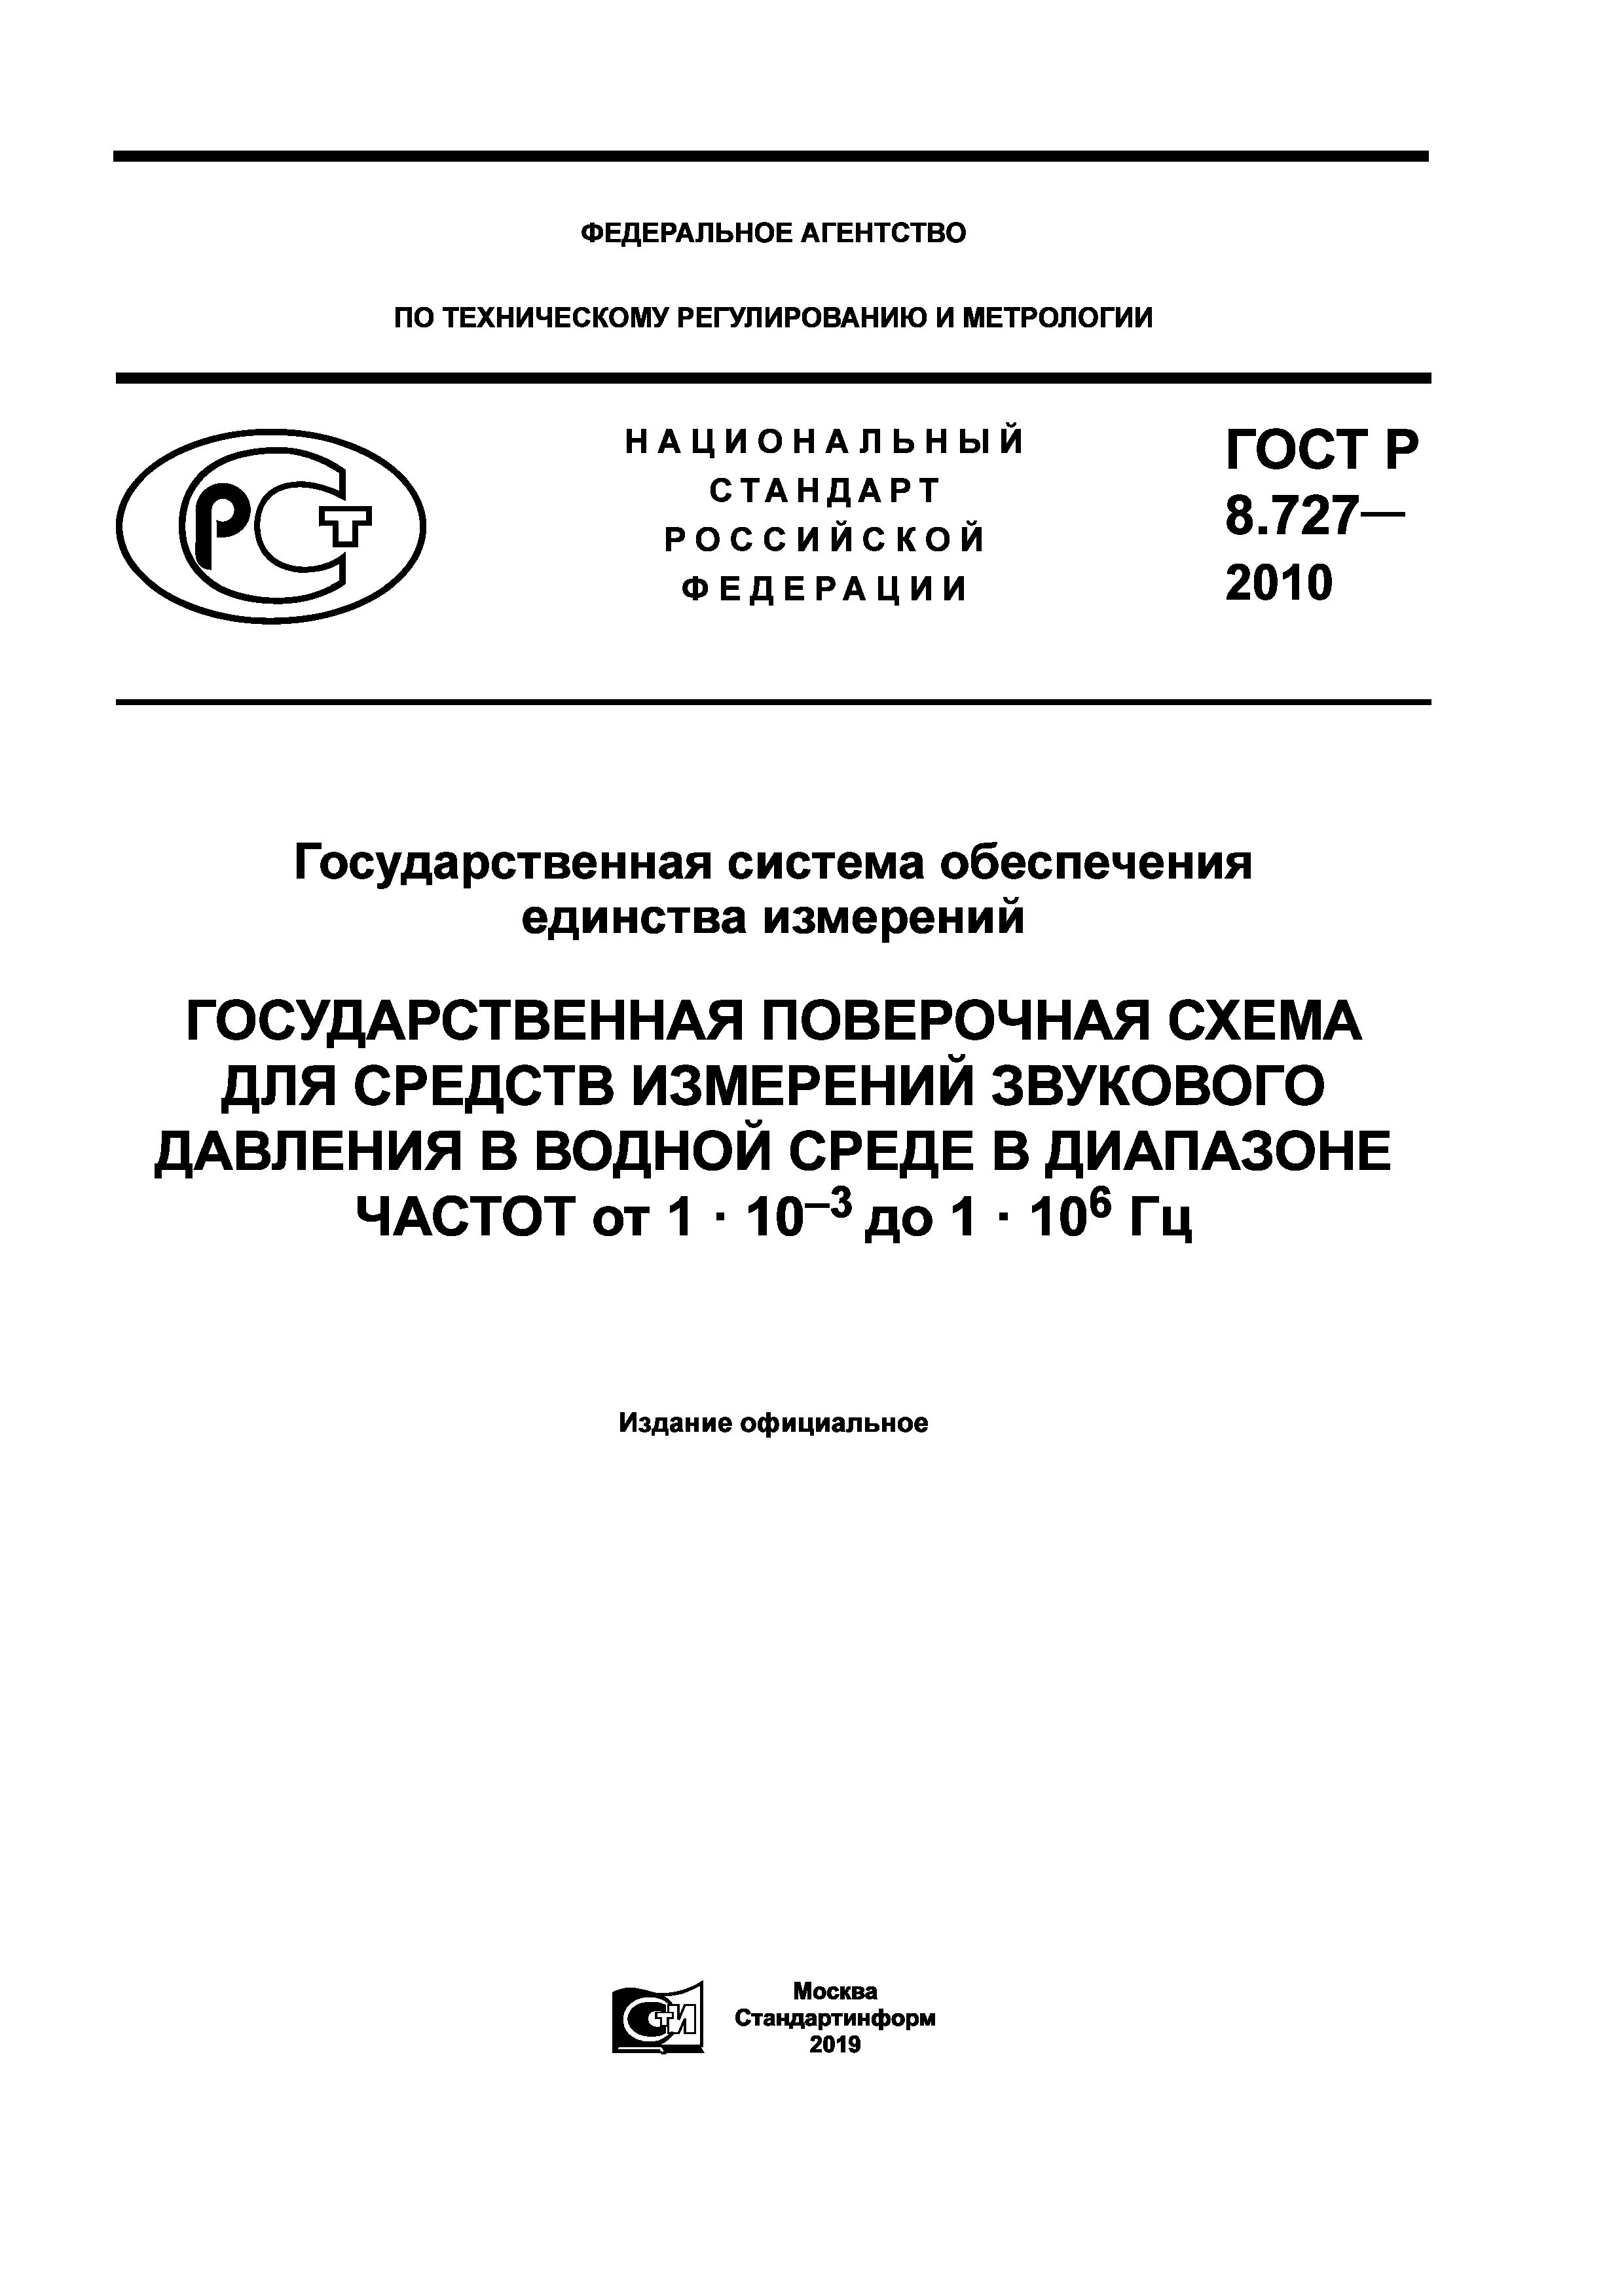 ГОСТ Р 8.727-2010